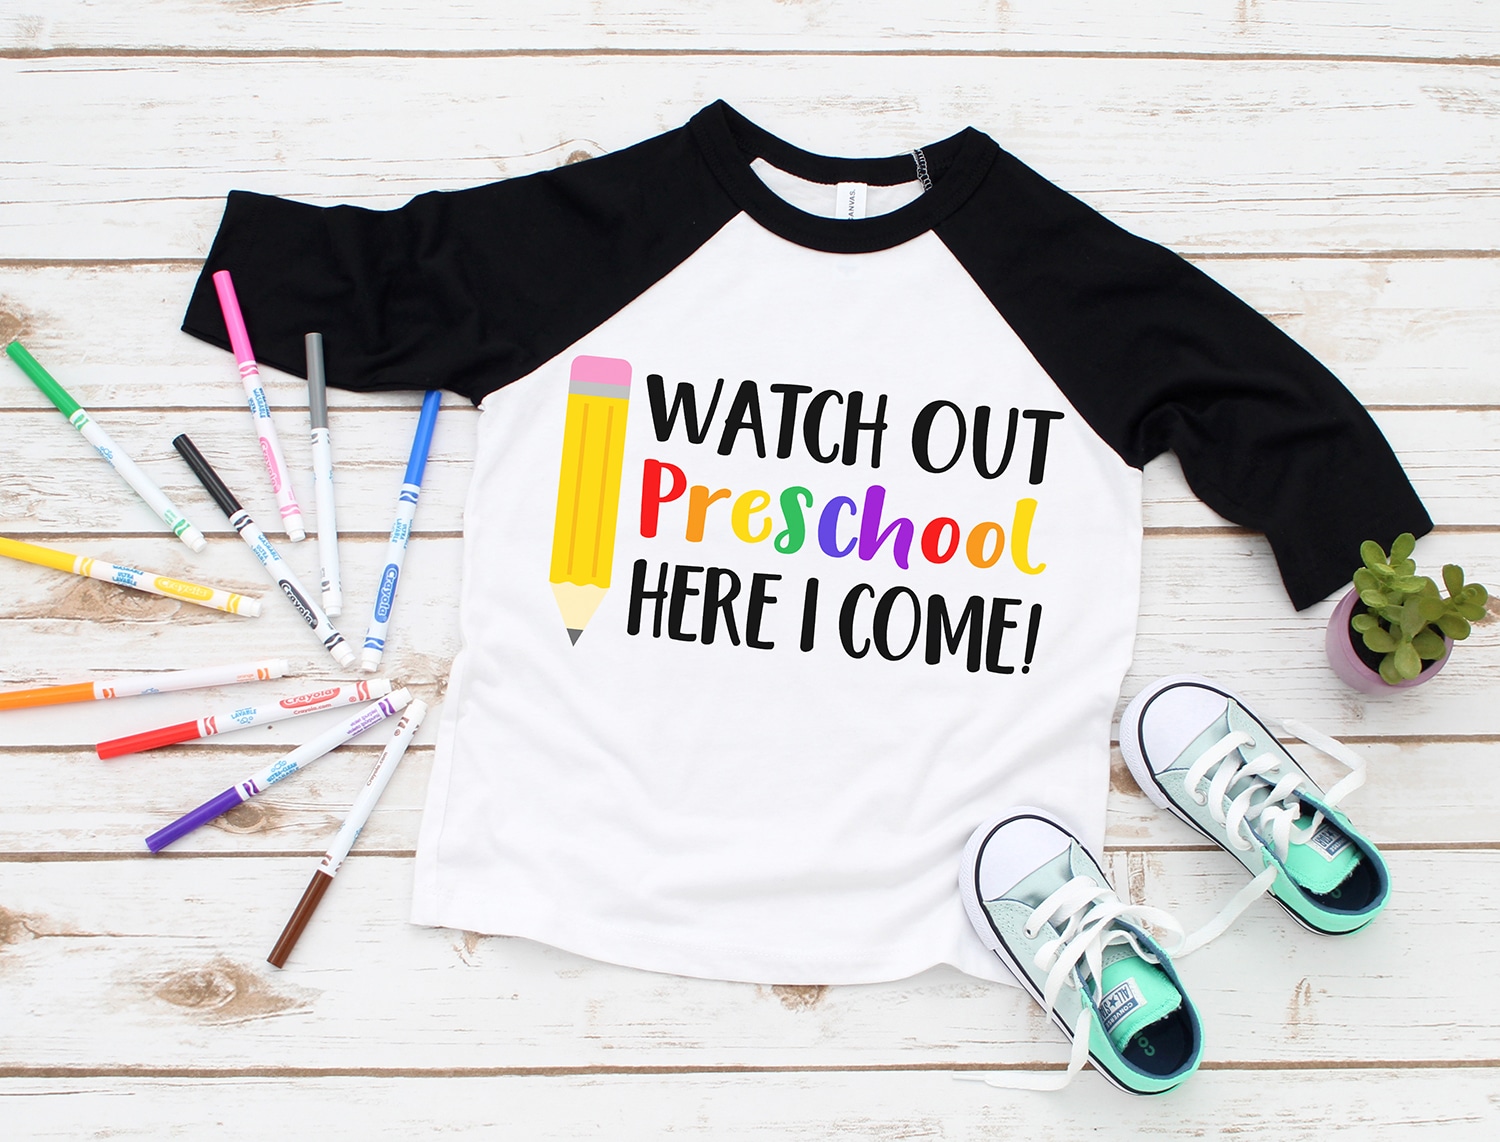 custom shirt svg design saying "watch out preschool, here I come!"